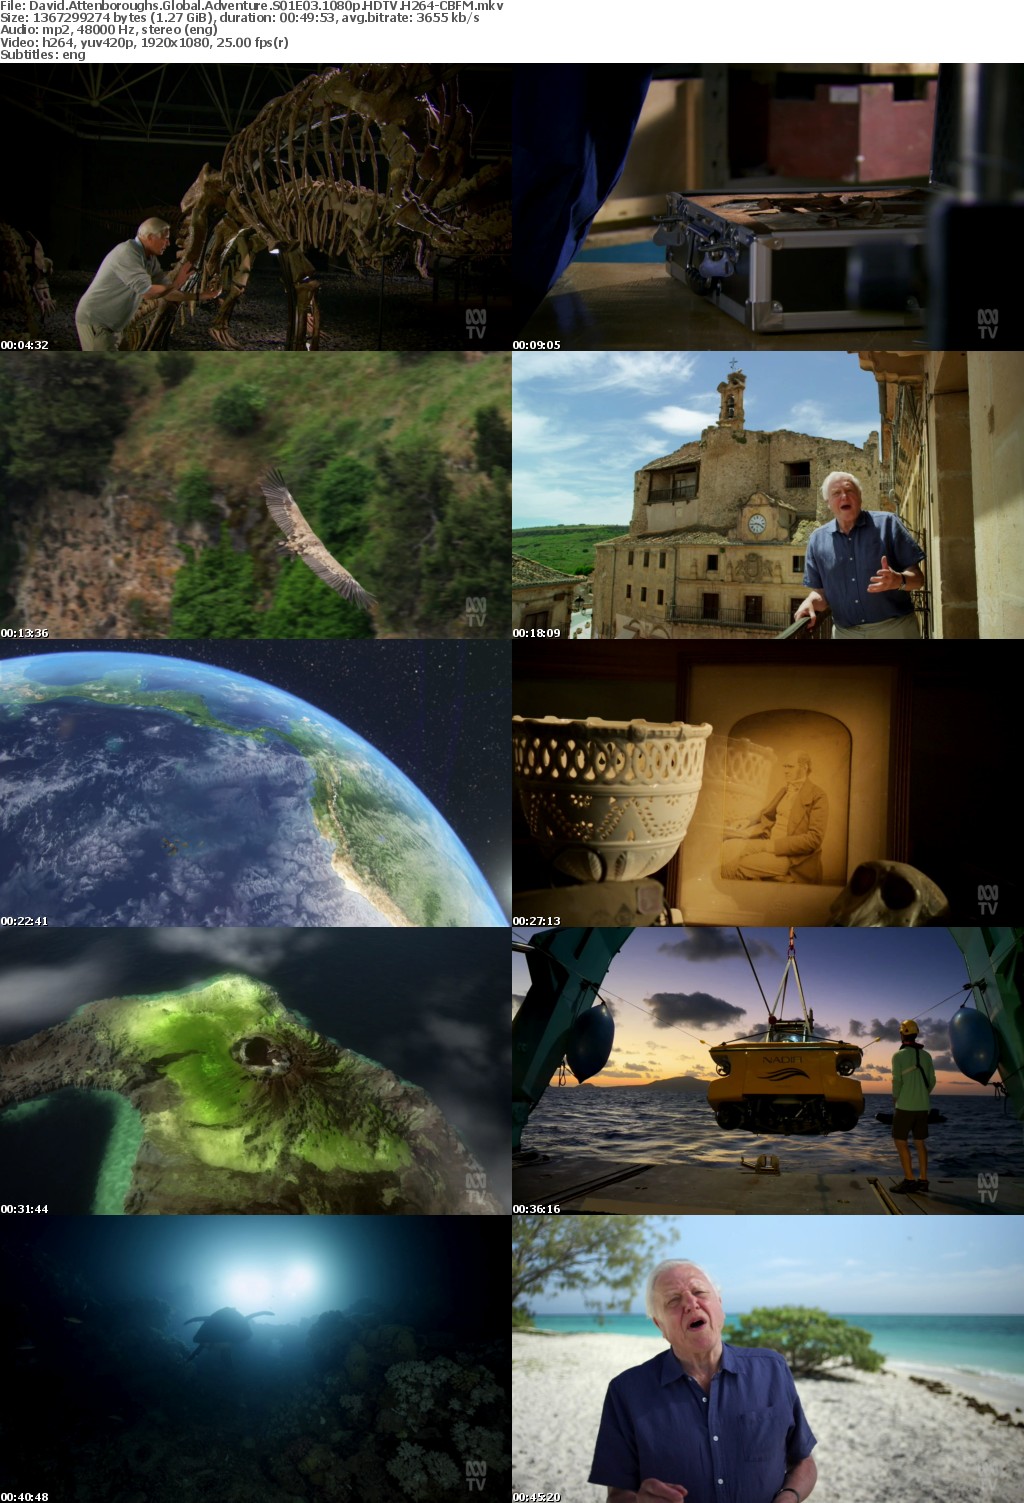 David Attenboroughs Global Adventure S01 1080p HDTV H264-CBFM